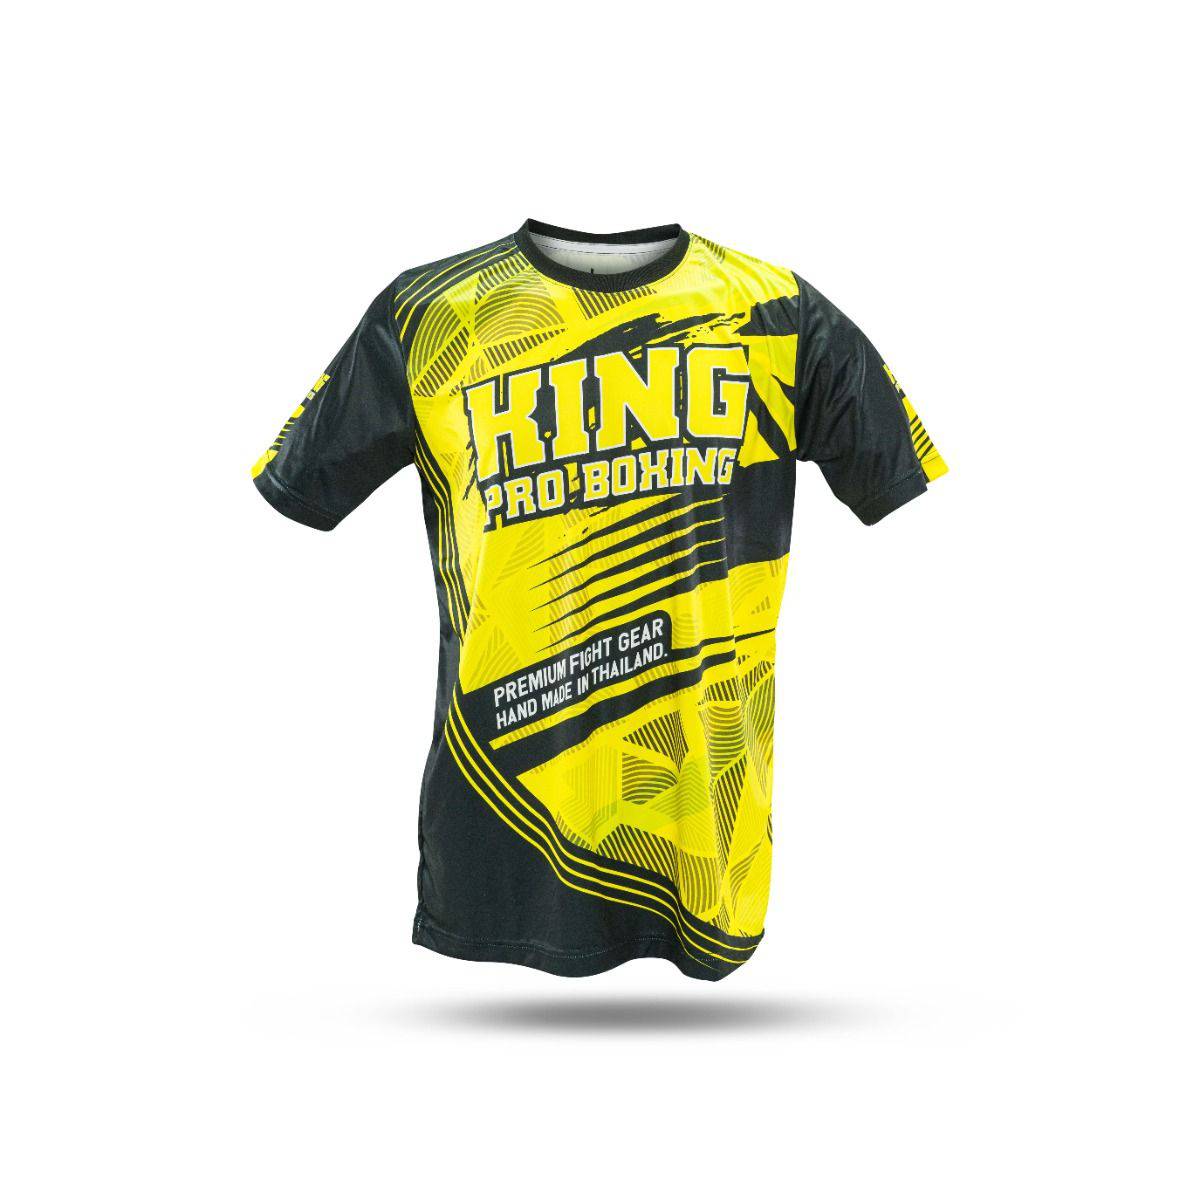 King pro boxing sport shirt 